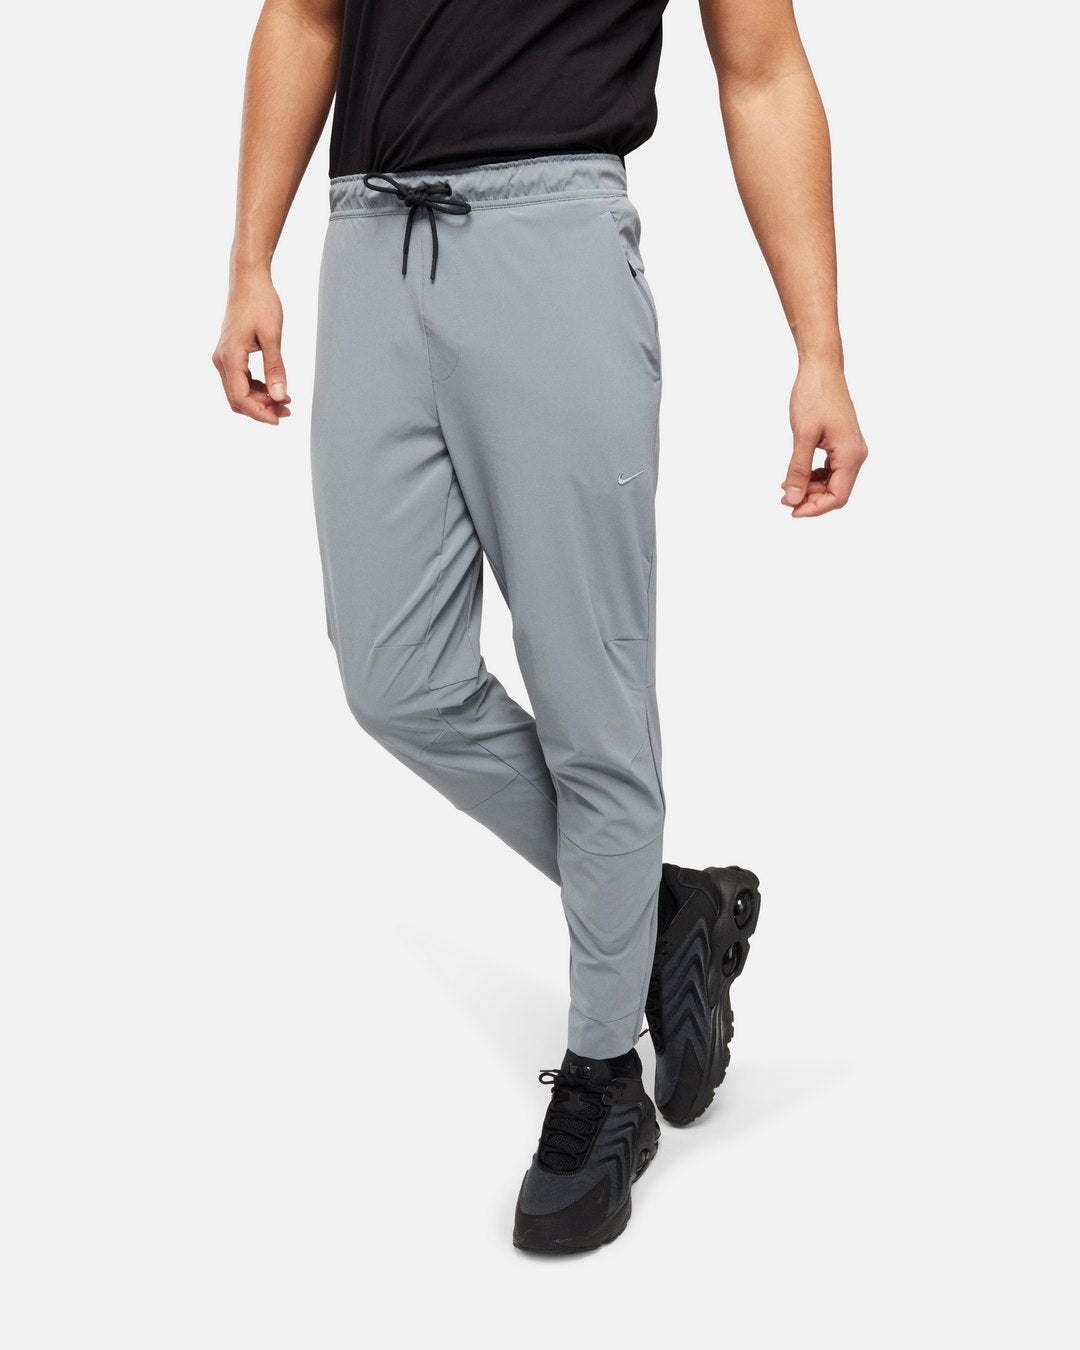 Pantaloni da jogging Nike Unlimited - Grigi